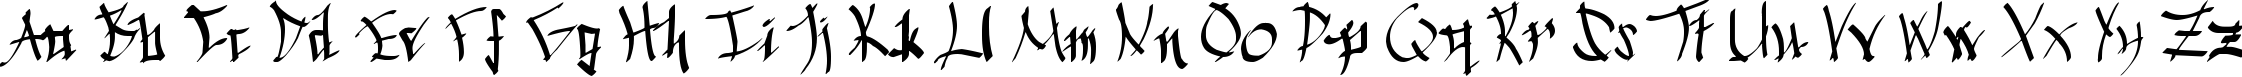 Пример написания английского алфавита шрифтом Chinese Calligraphy